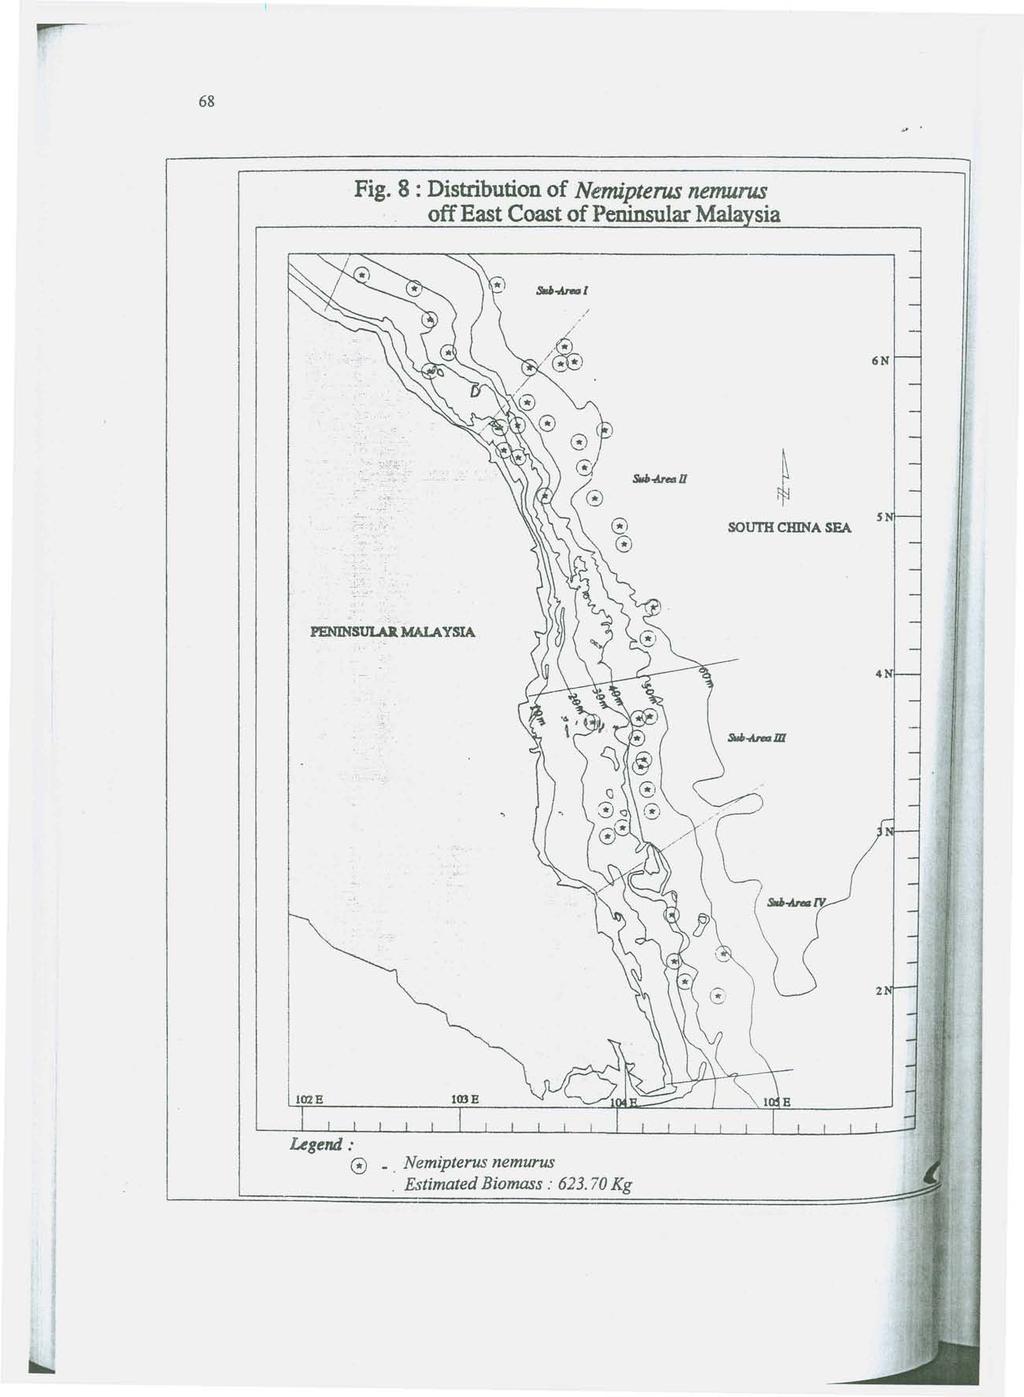 Fig. 8 : Distribution of Nemipterus nemurus off East Coast of